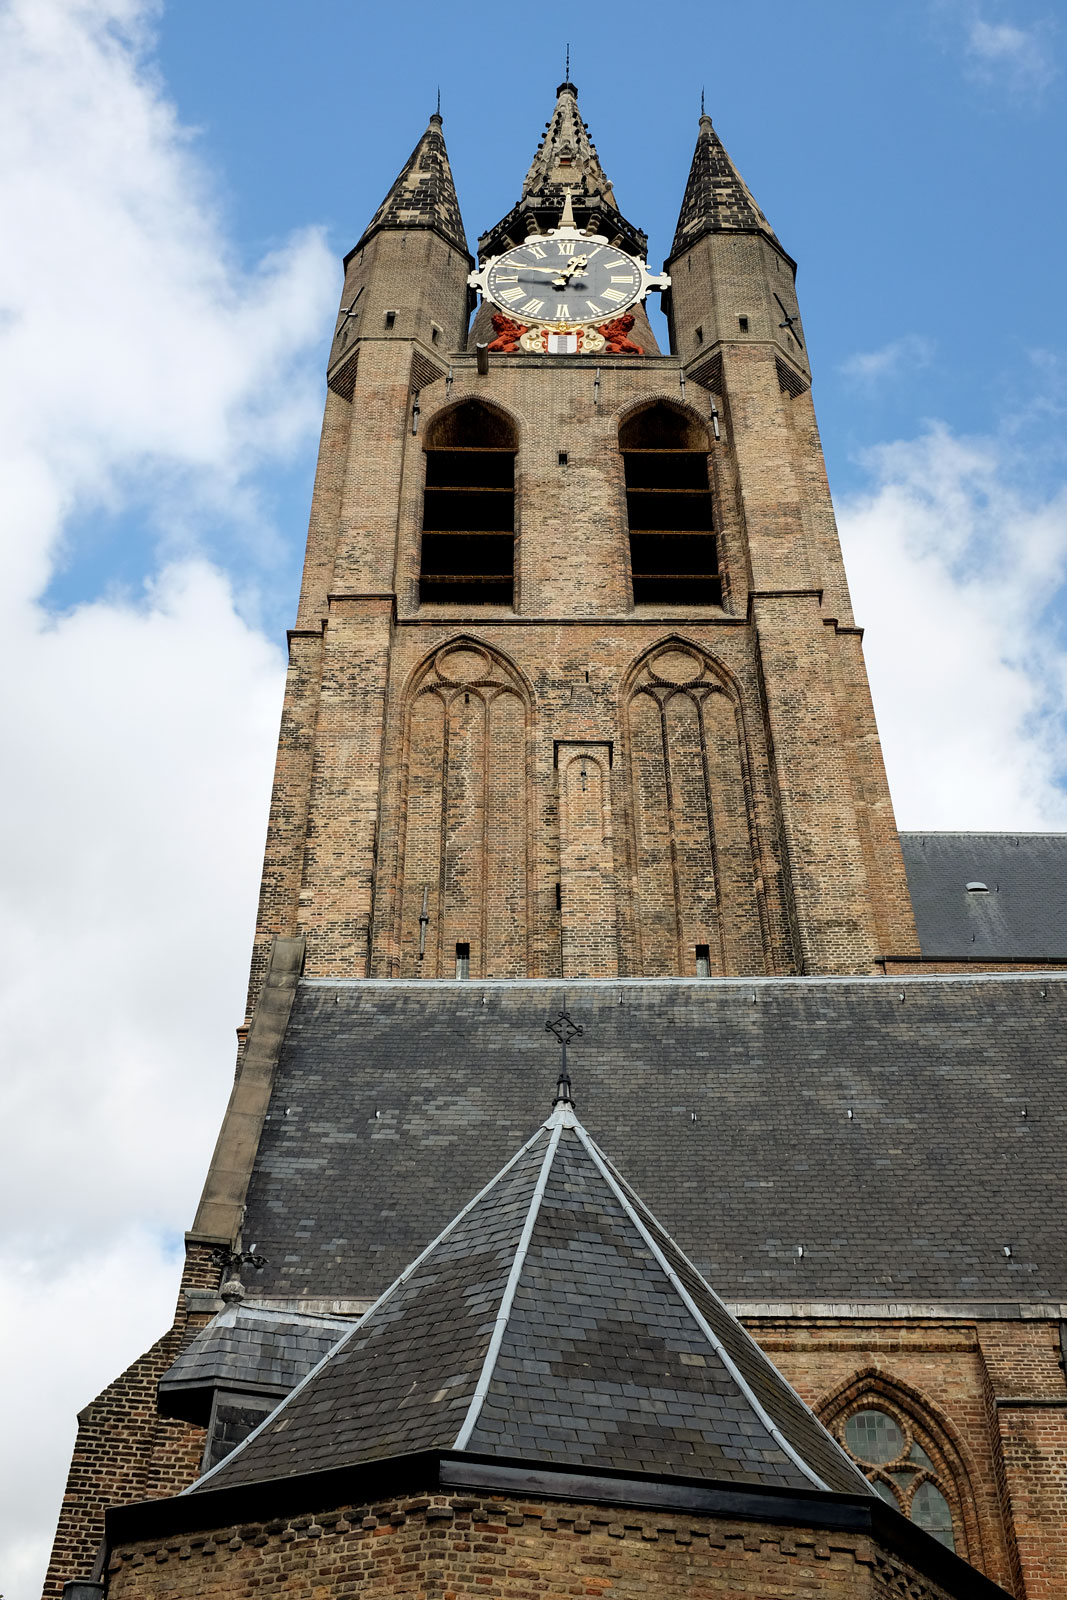 The belltower of the Oude Kerk in Delft